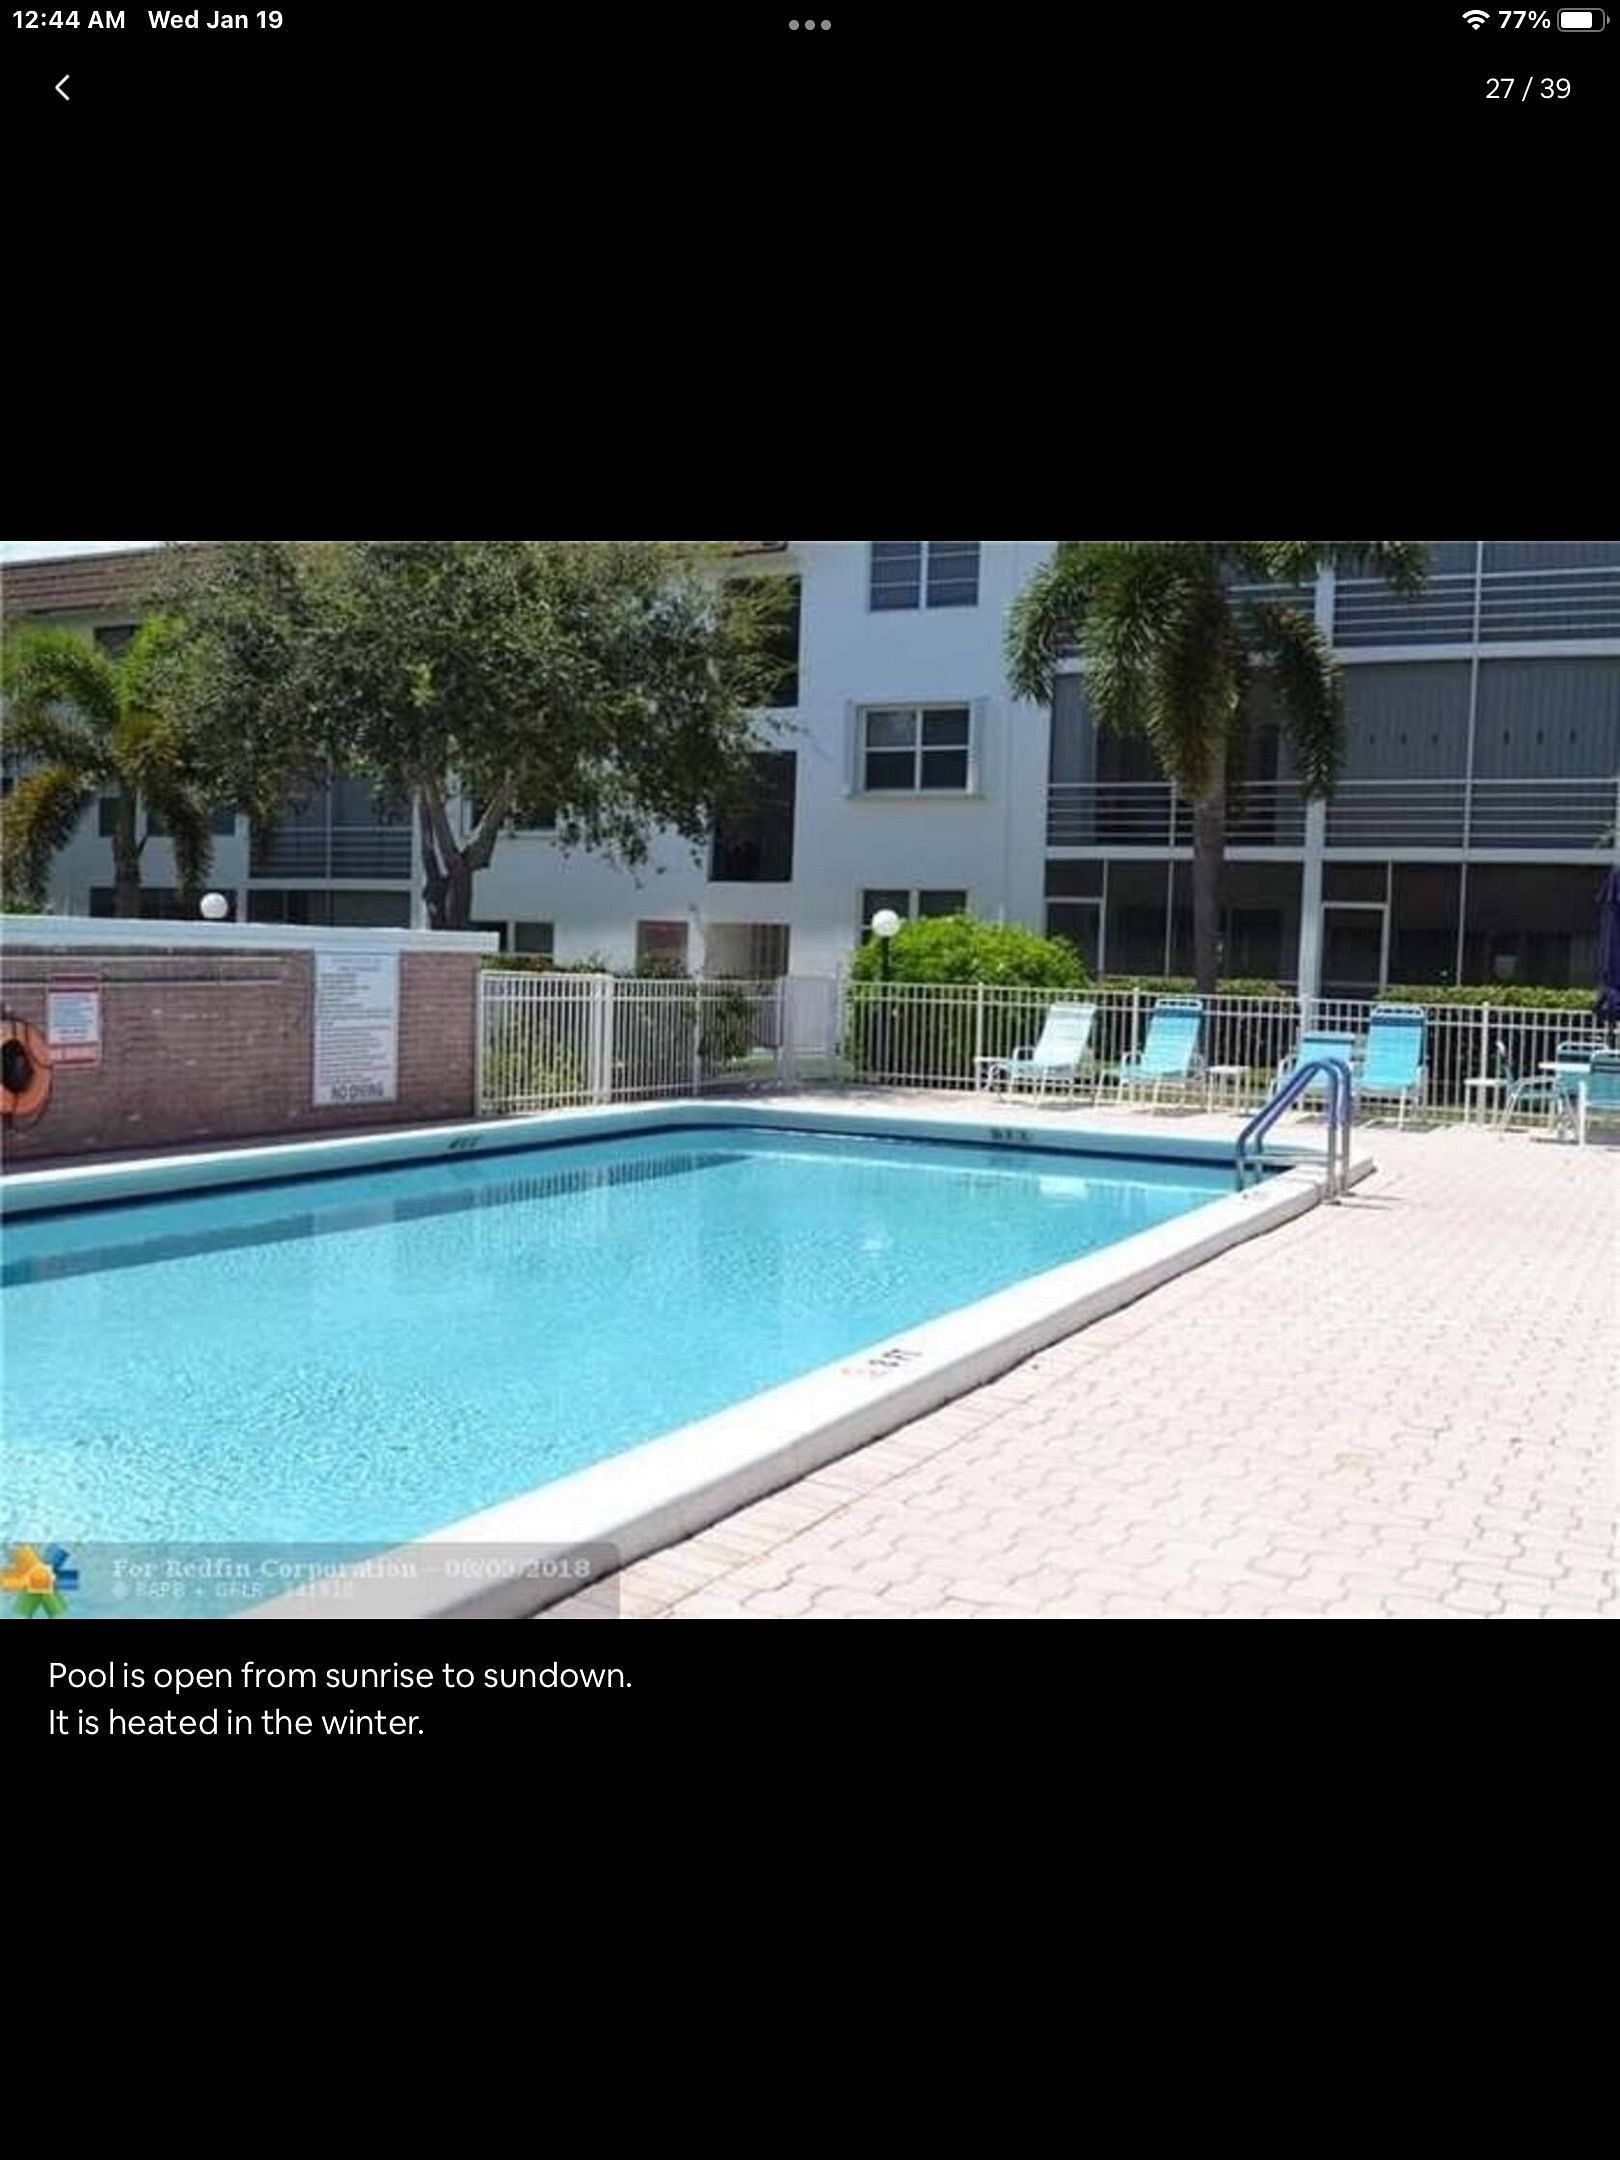 JWguest Condominium at Lauderdale-by-the-Sea, Florida | Pompano 5 minute walk to the beach | Jwbnb no brobnb 20